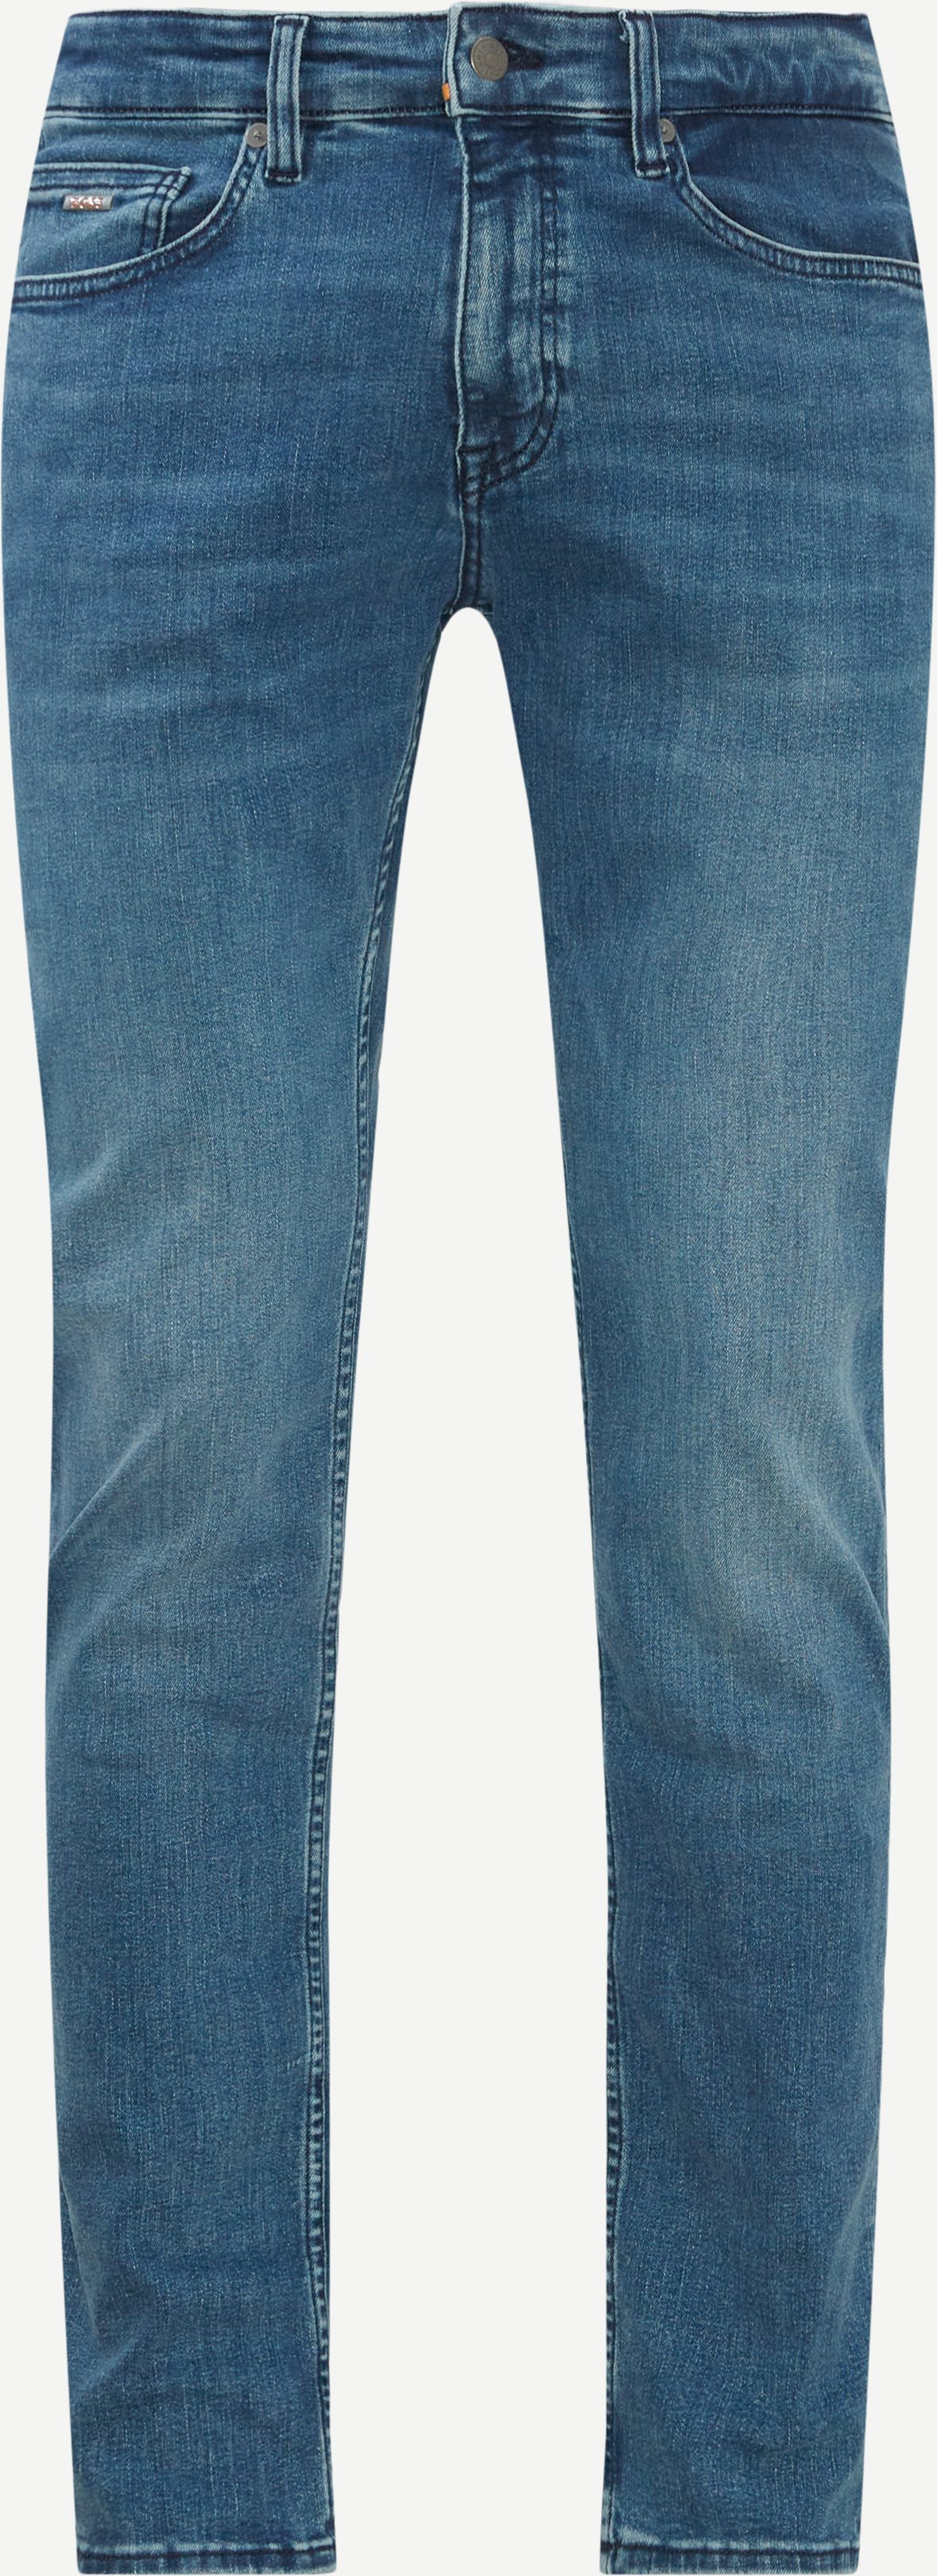 BOSS Casual Jeans 6706 DELAWARE Denim